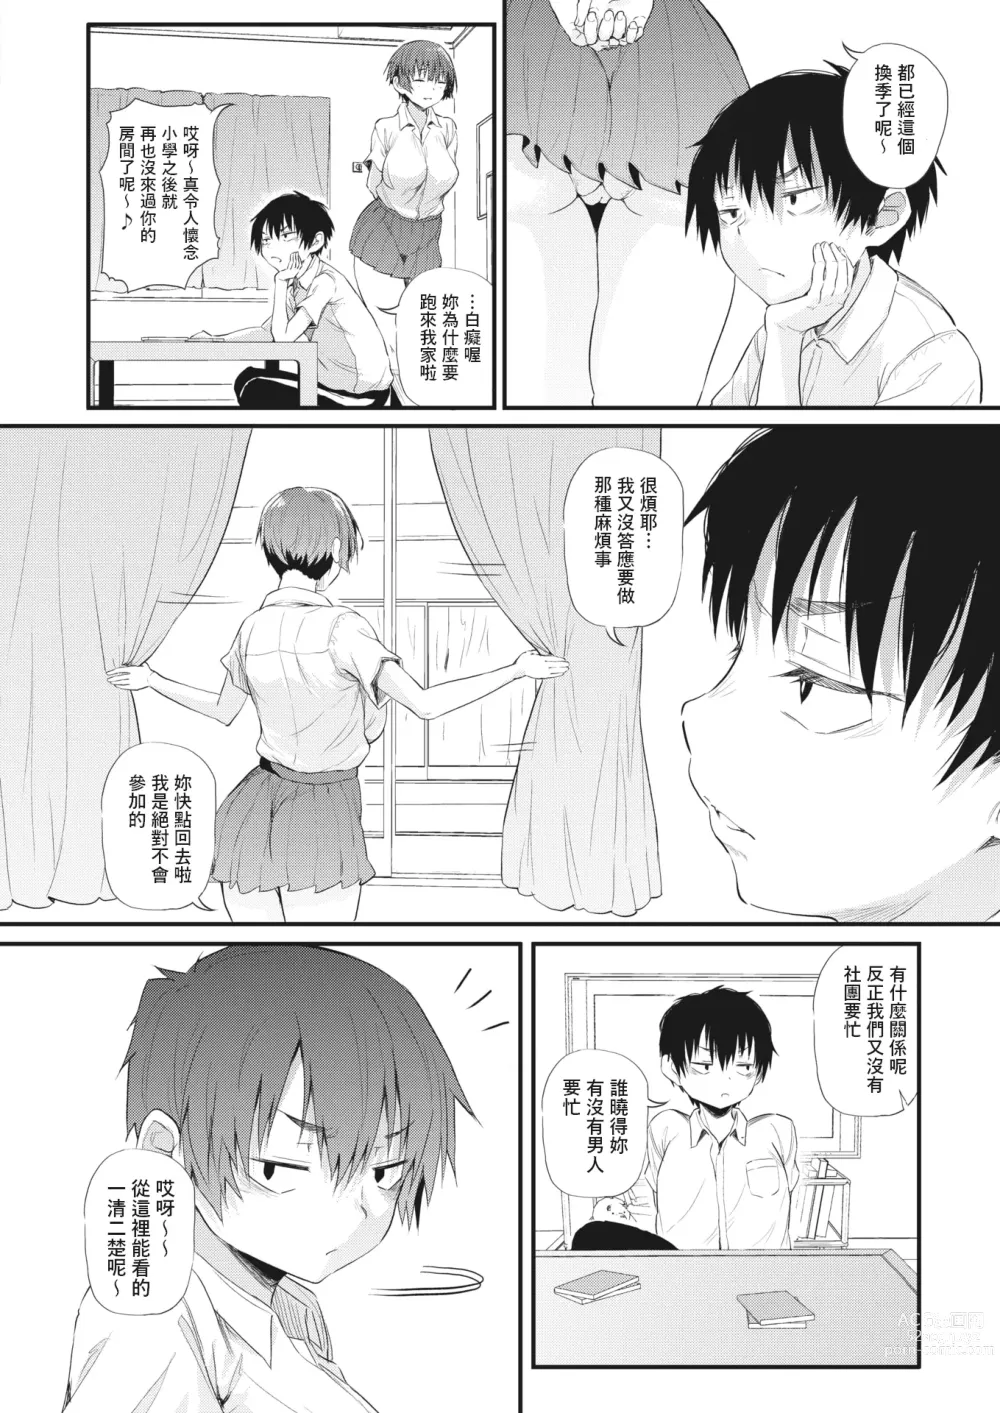 Page 8 of manga Mado no Mukou no Osananajimi